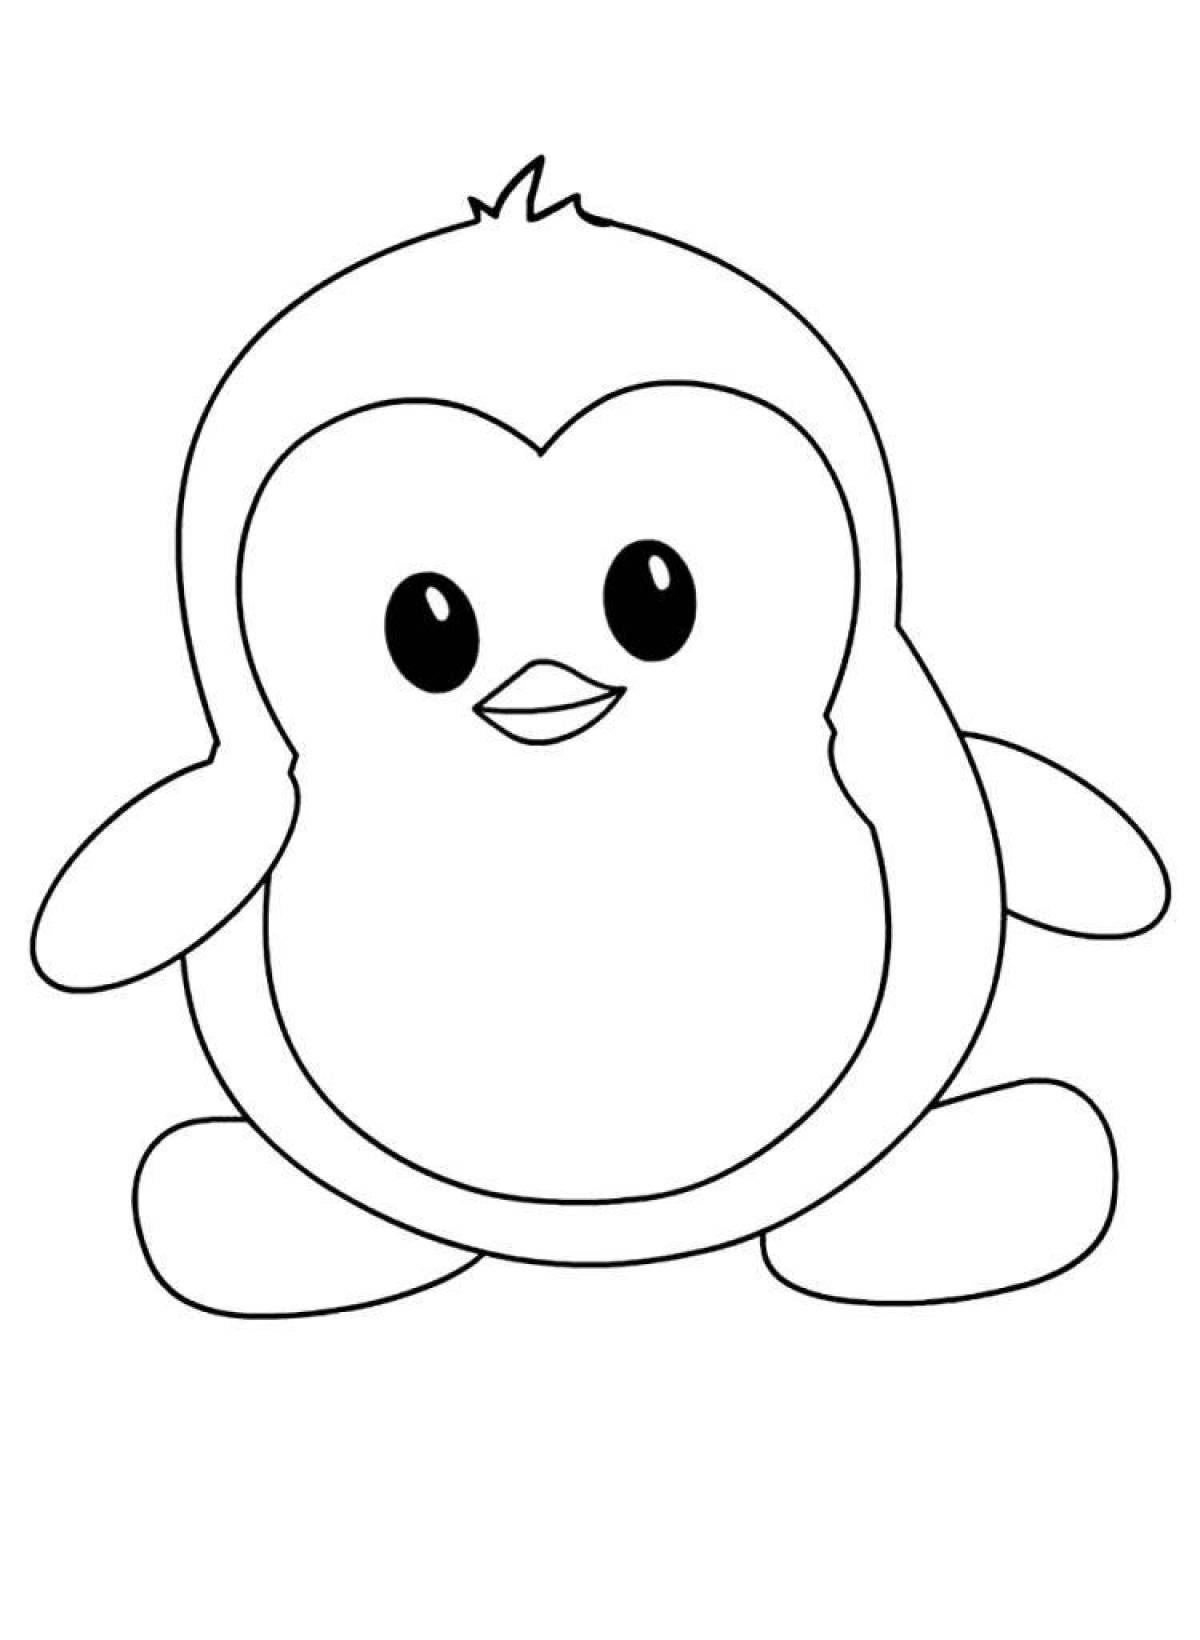 Coloring page adorable little penguin